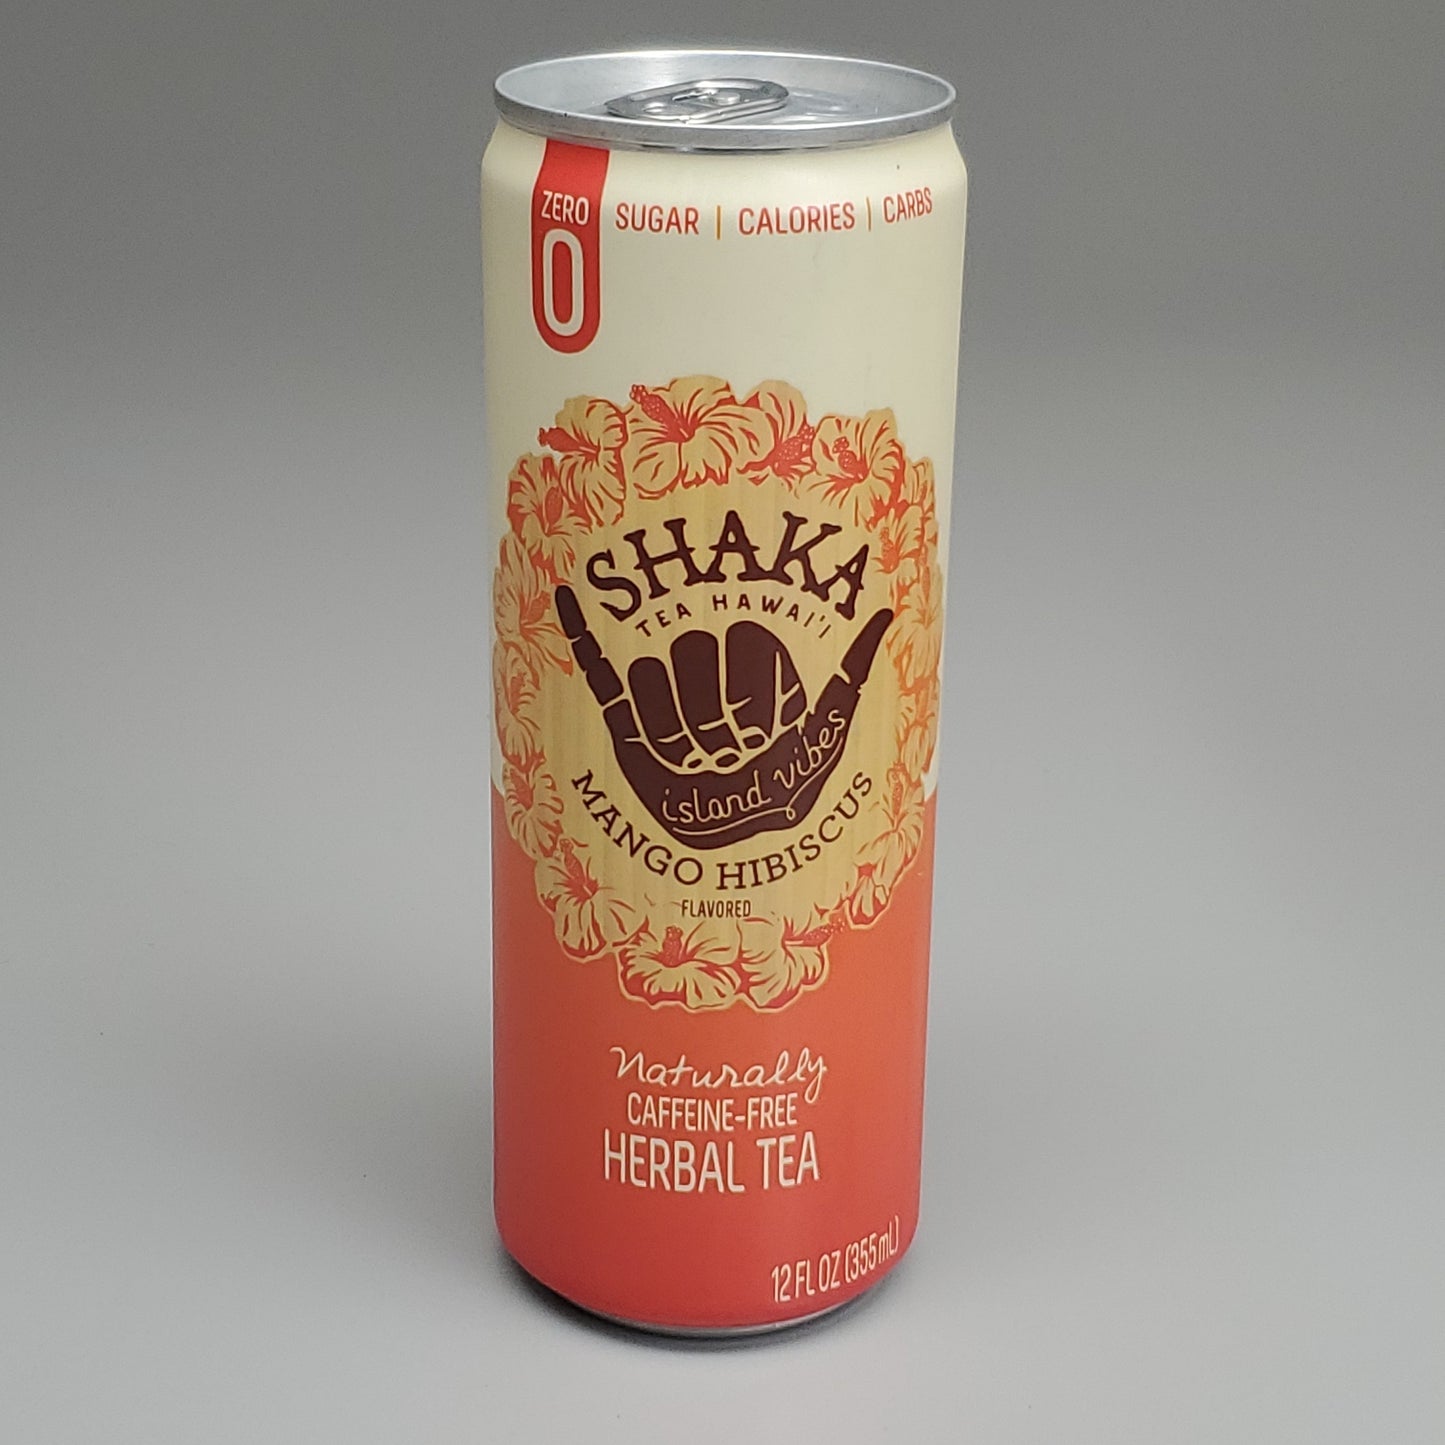 SHAKA 12-PACK! Mango Hibiscus Naturally Caffeine-Free Herbal Tea 12 fl oz (02/24)